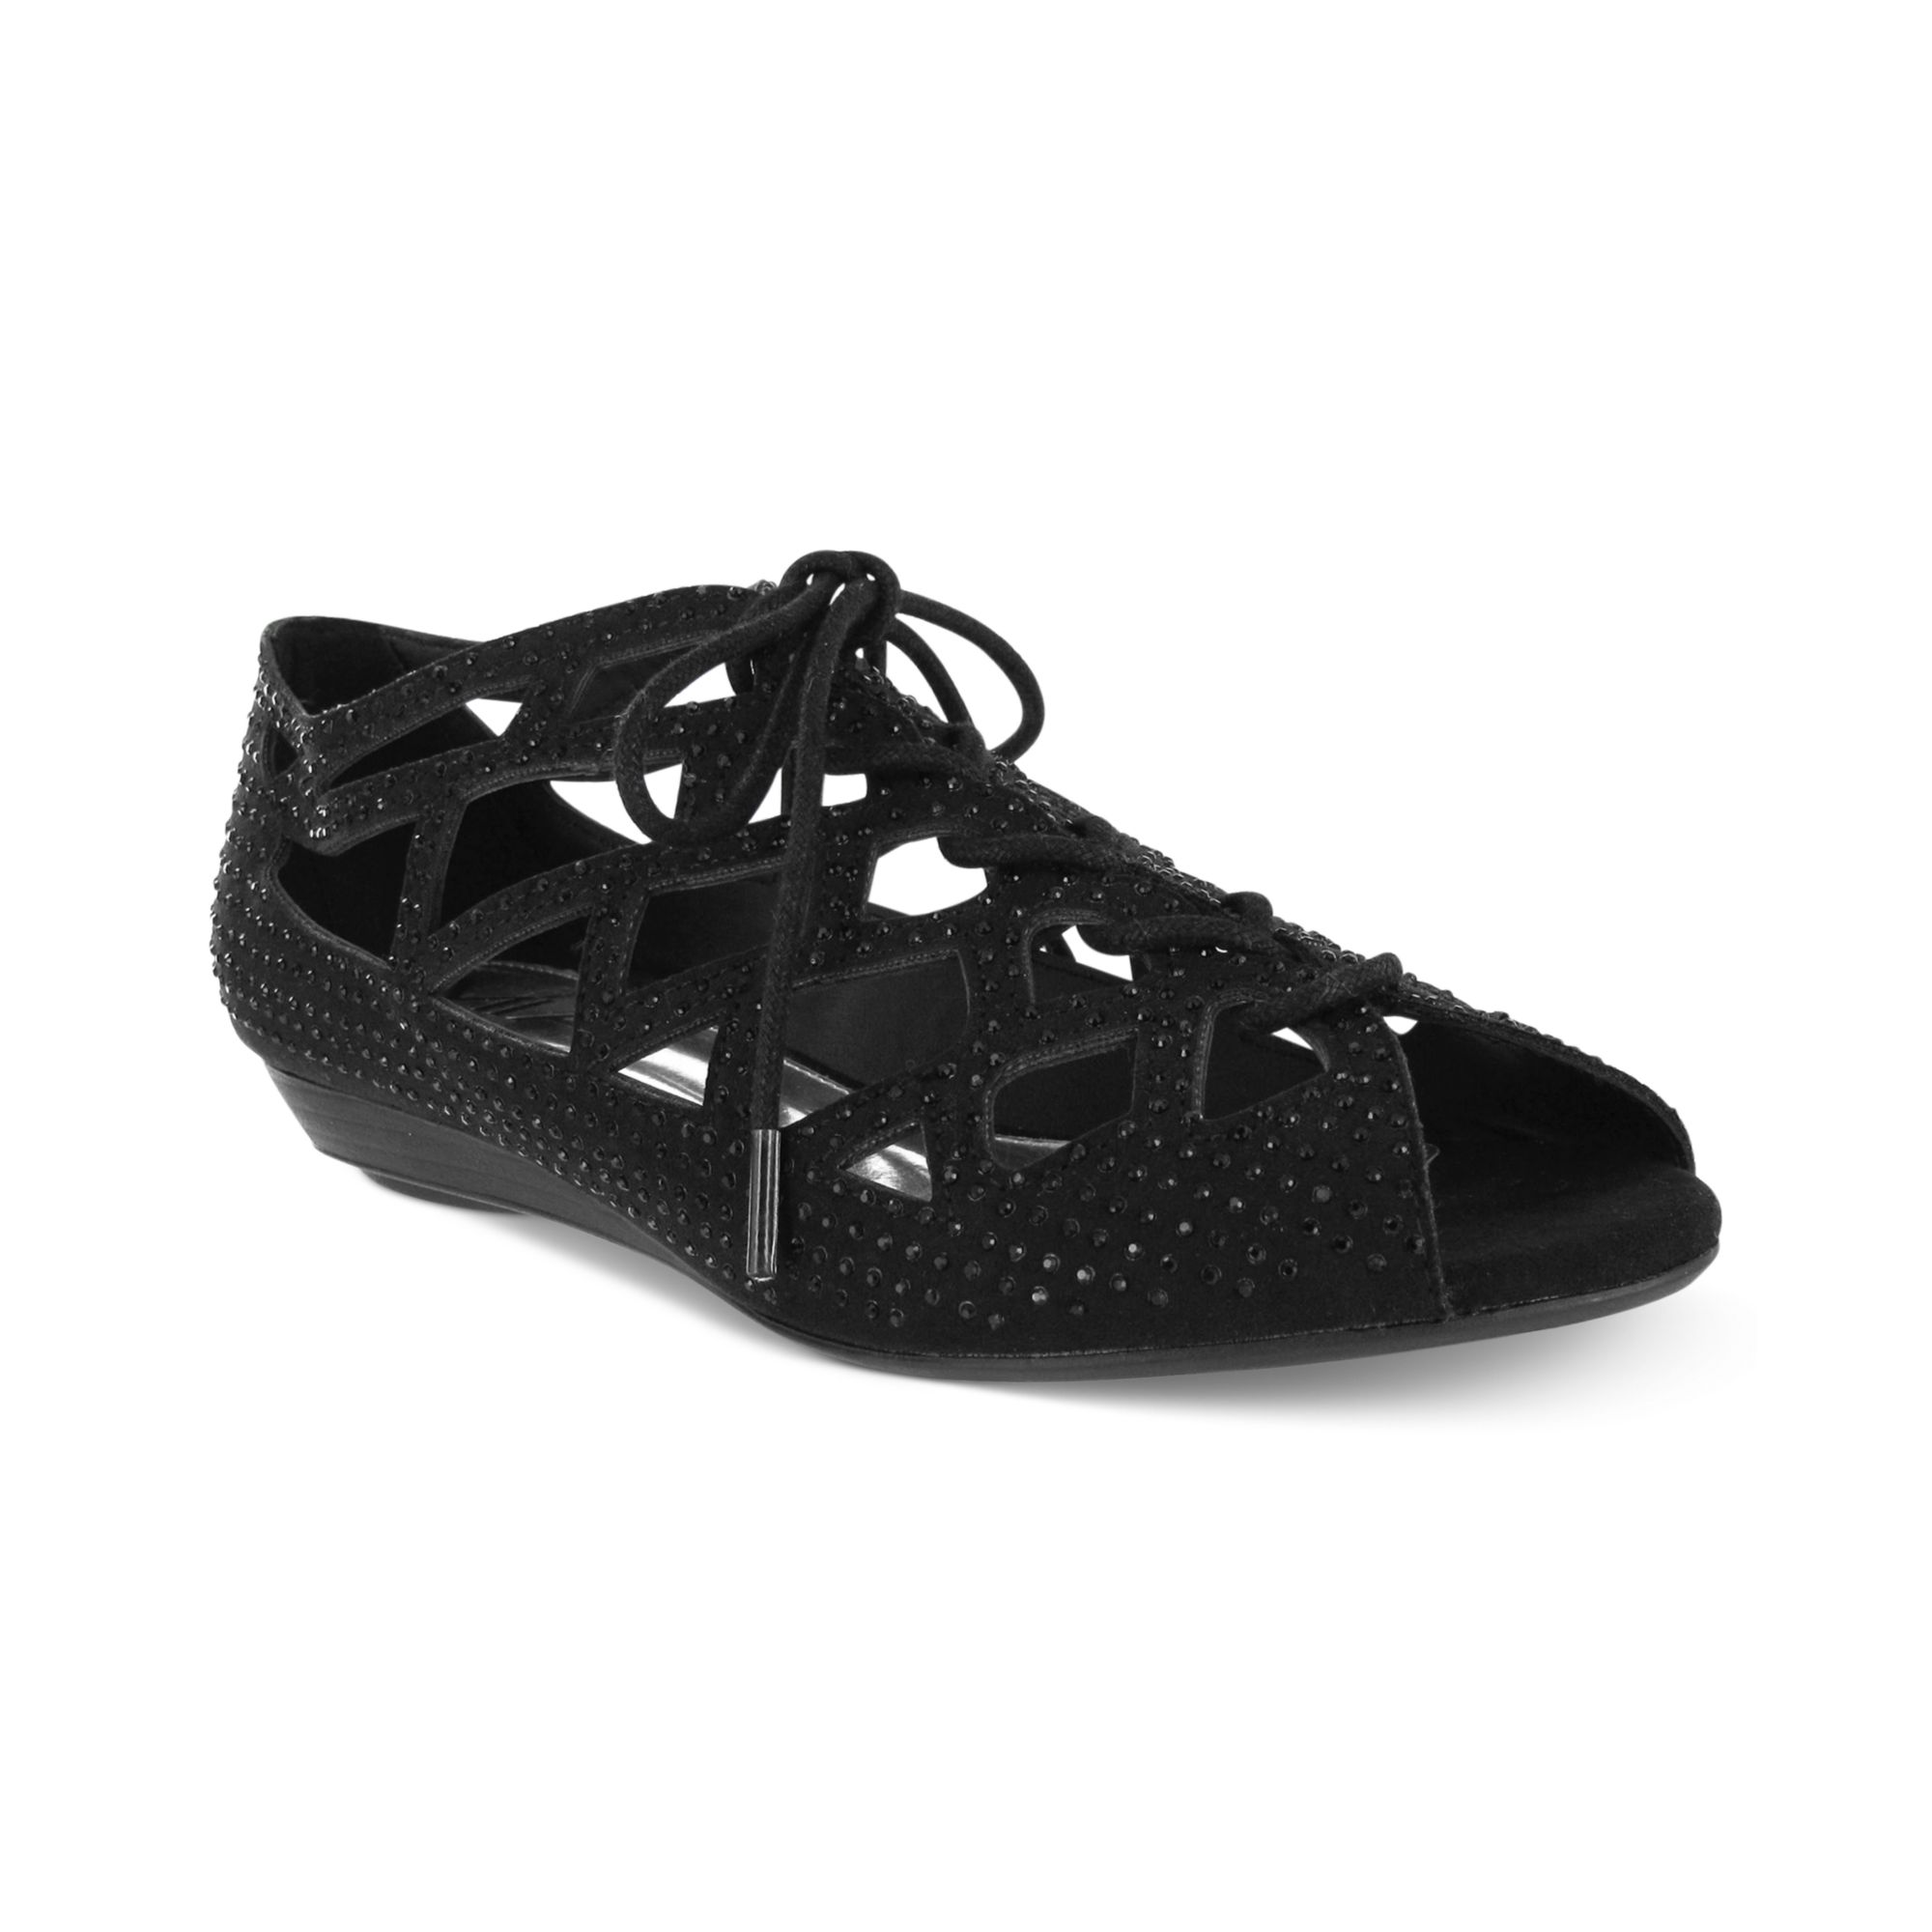 Mia Lizzie Demi Wedge Sandals in Black (black suede) | Lyst